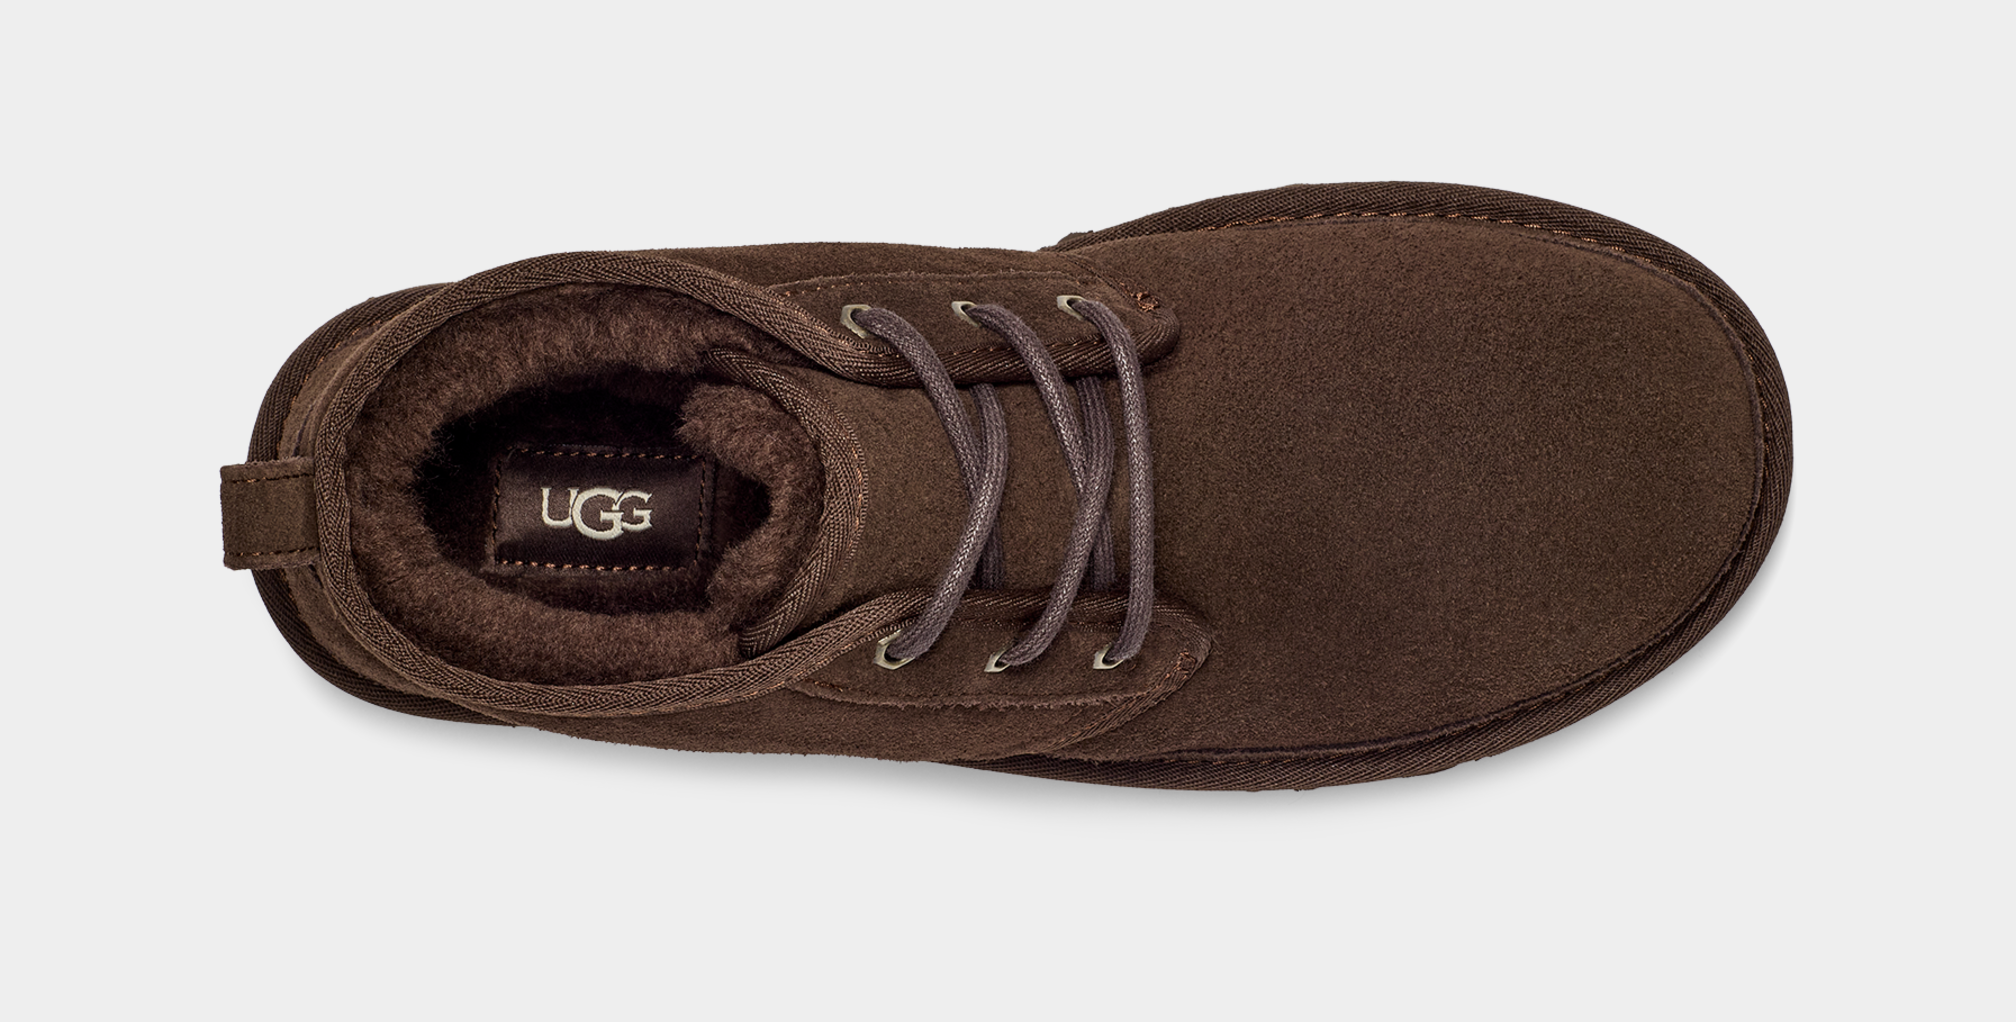 UGG® Neumel for Men | Lace-Up Casual Shoes at UGG.com